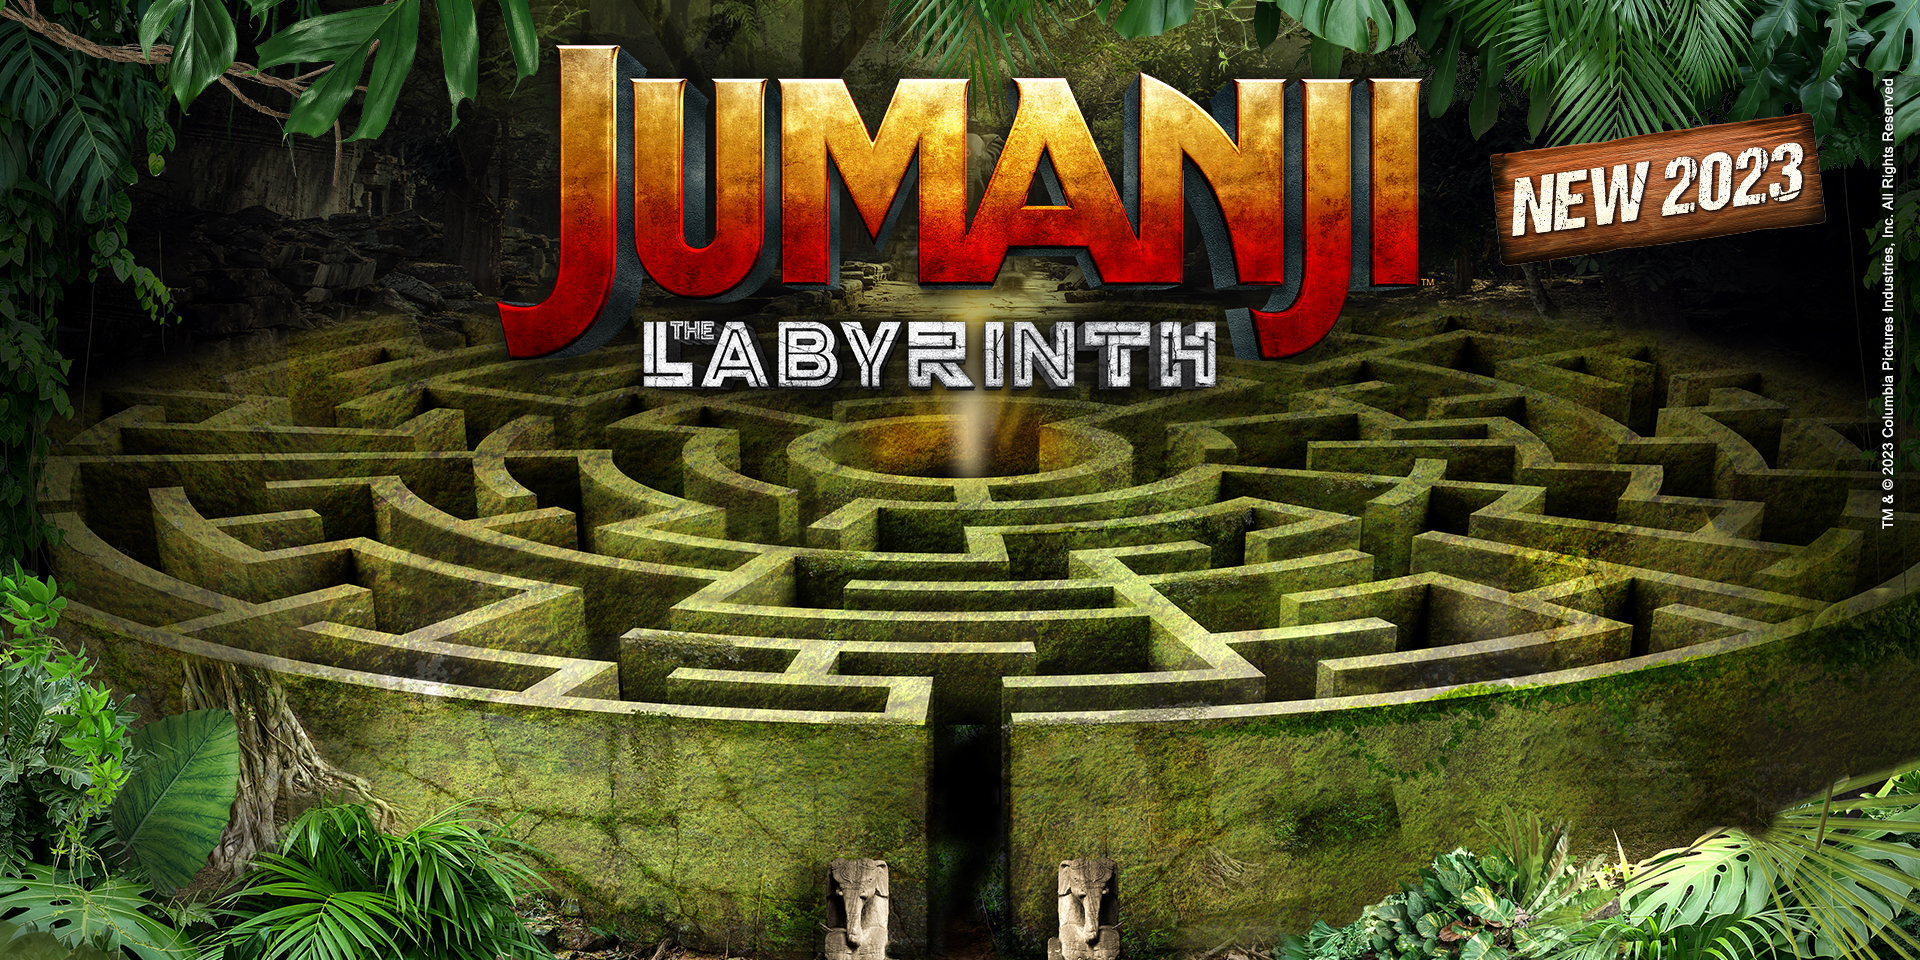 Jumanji The Labyrinth